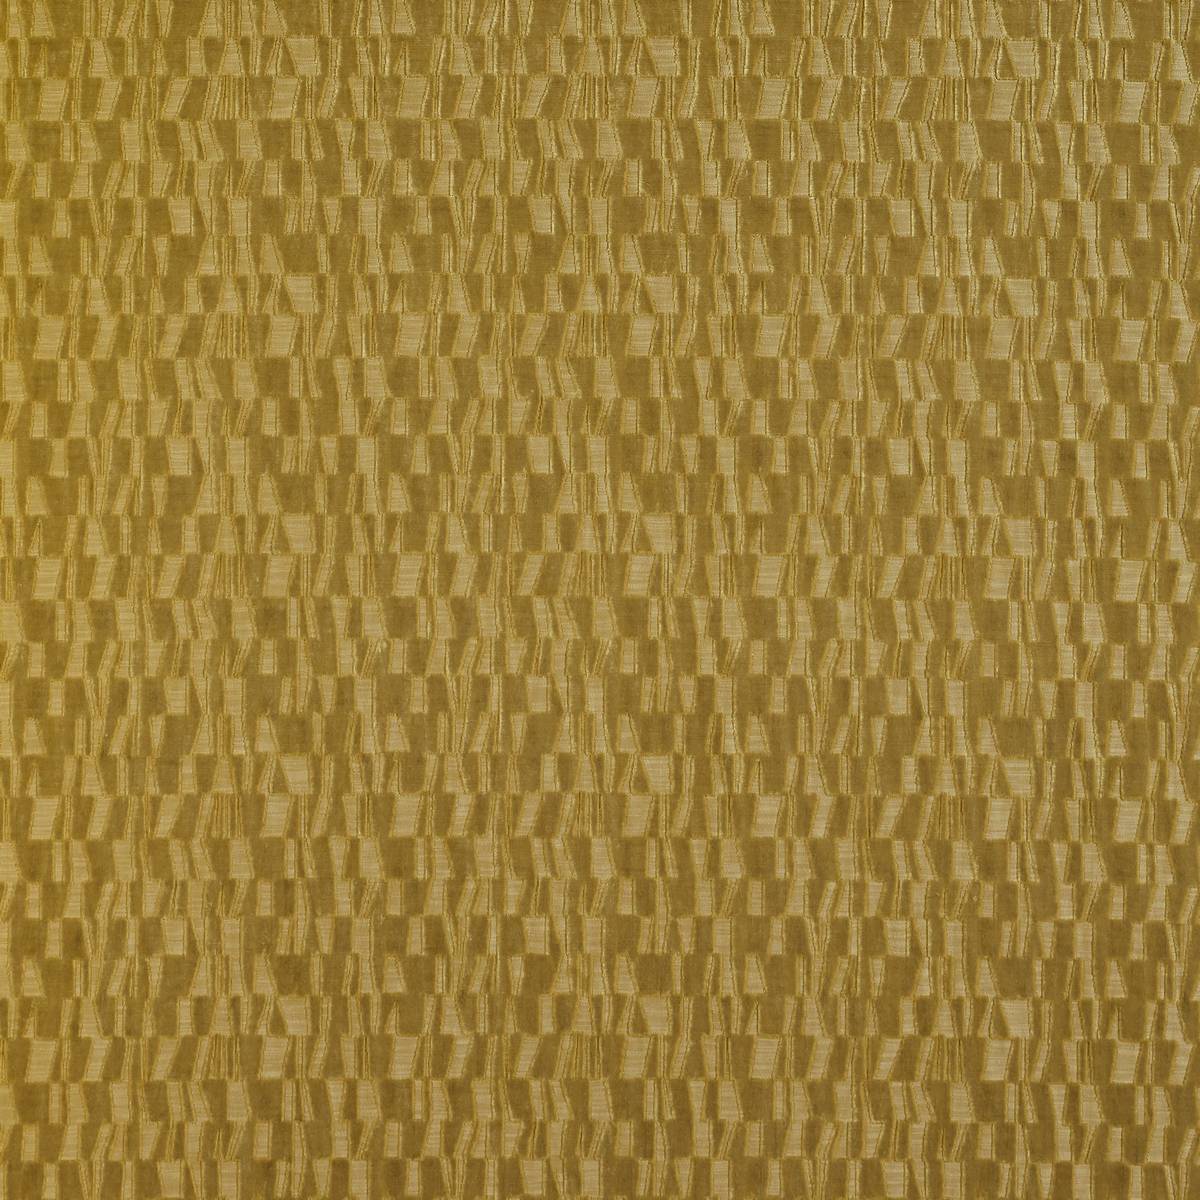 Otaka Lichen Fabric by Harlequin